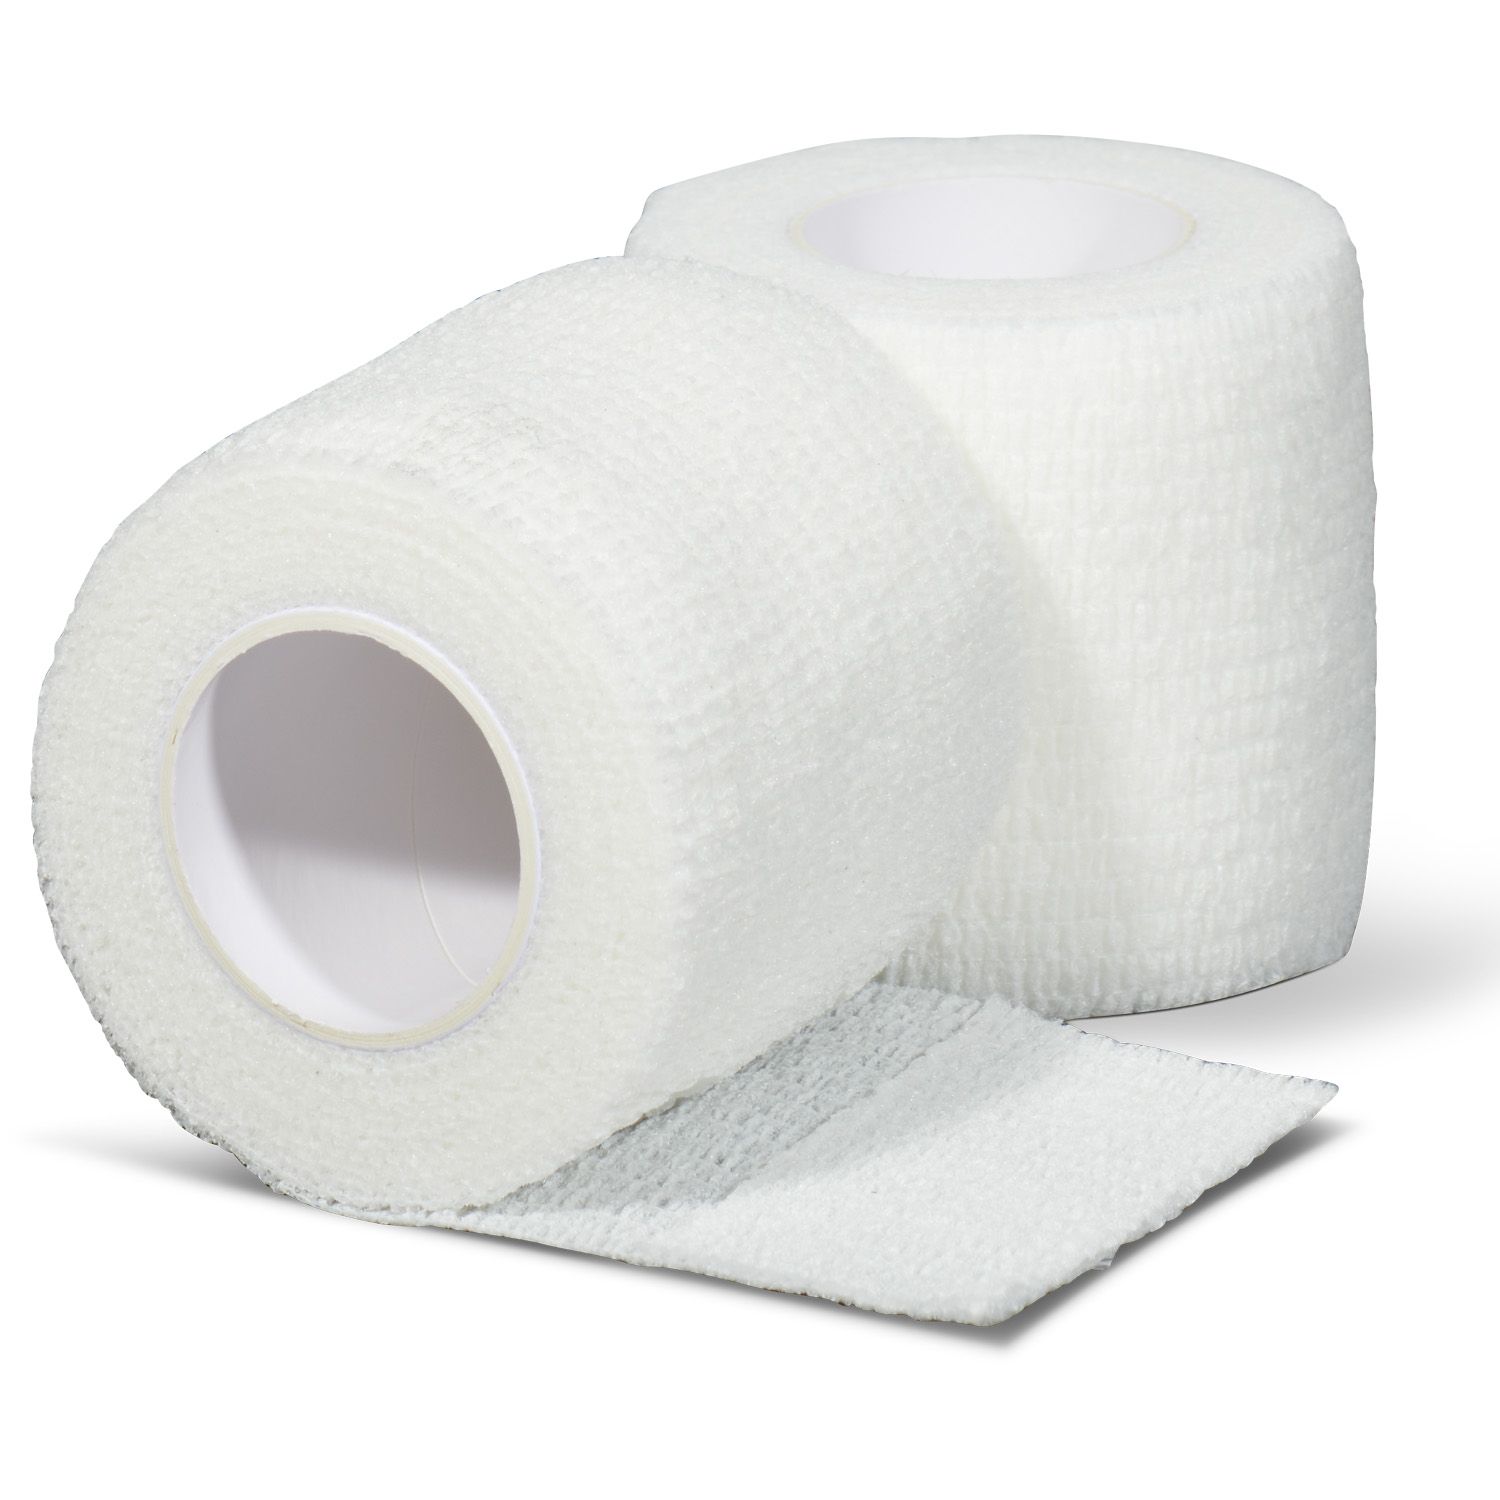 gladiator sports underwrap bandage per 12 rolls white